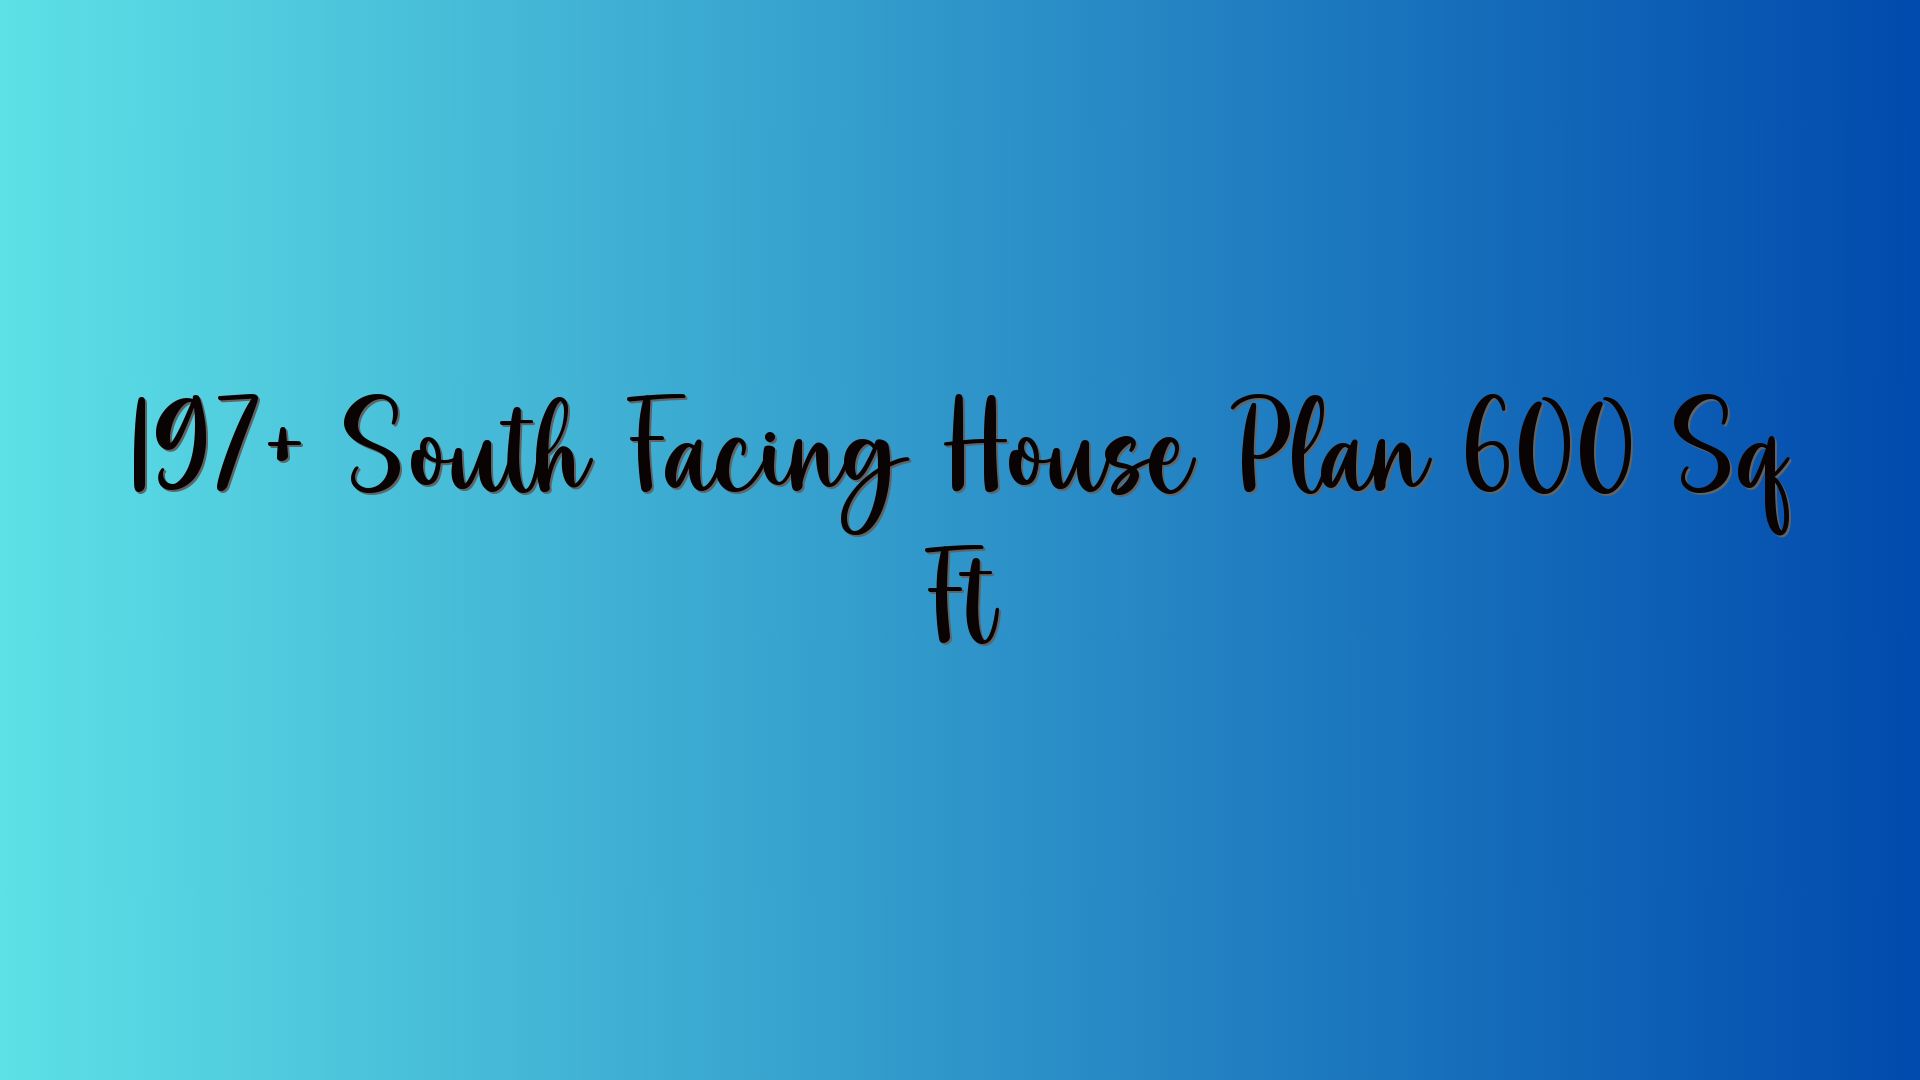 197+ South Facing House Plan 600 Sq Ft